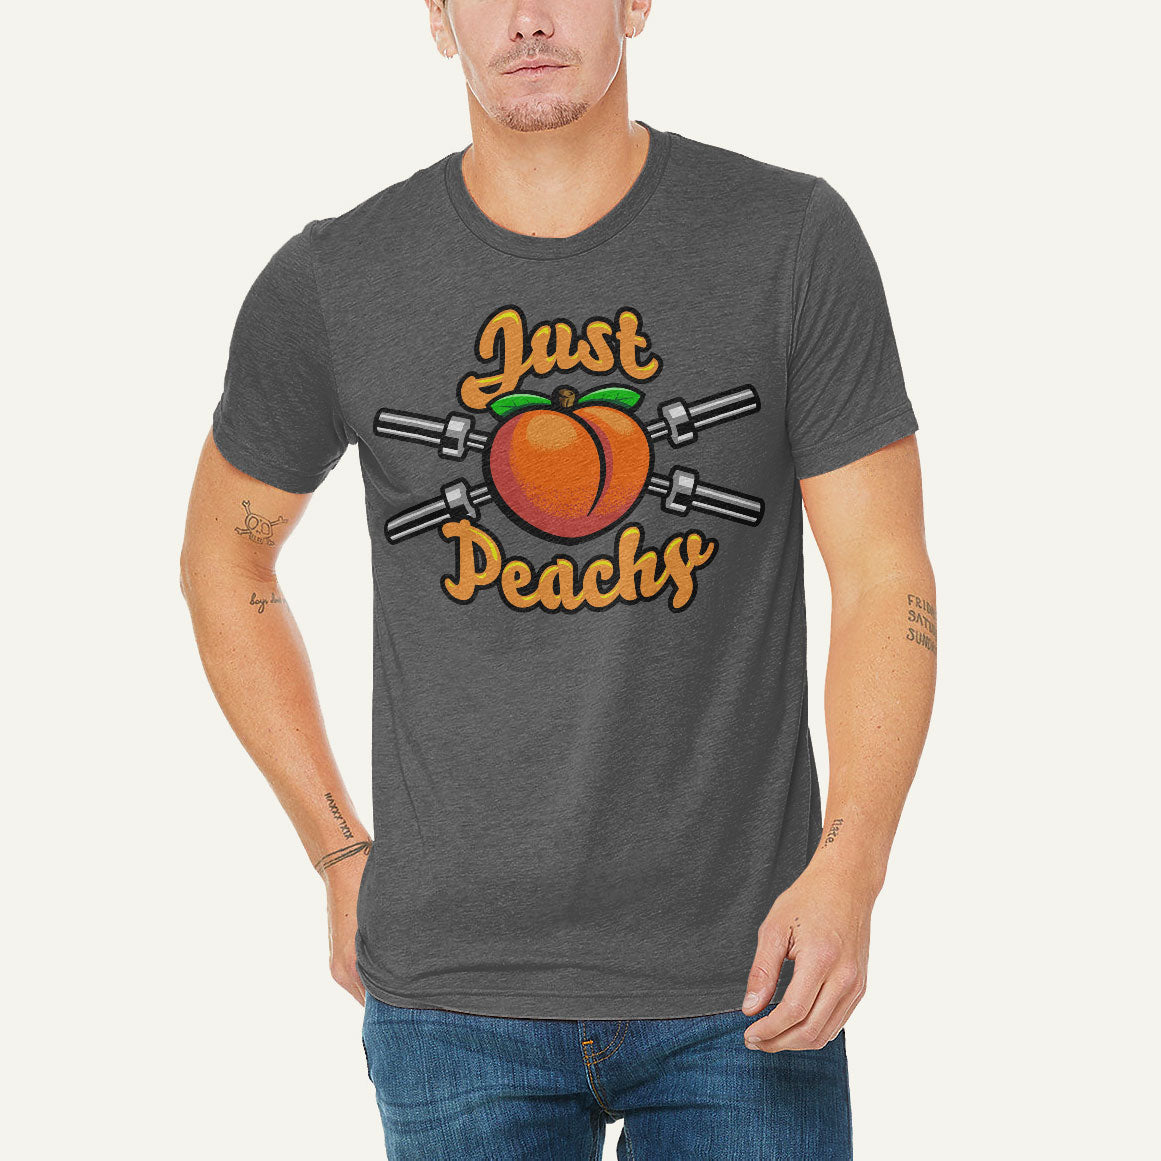 Just Peachy Men’s Triblend T-Shirt